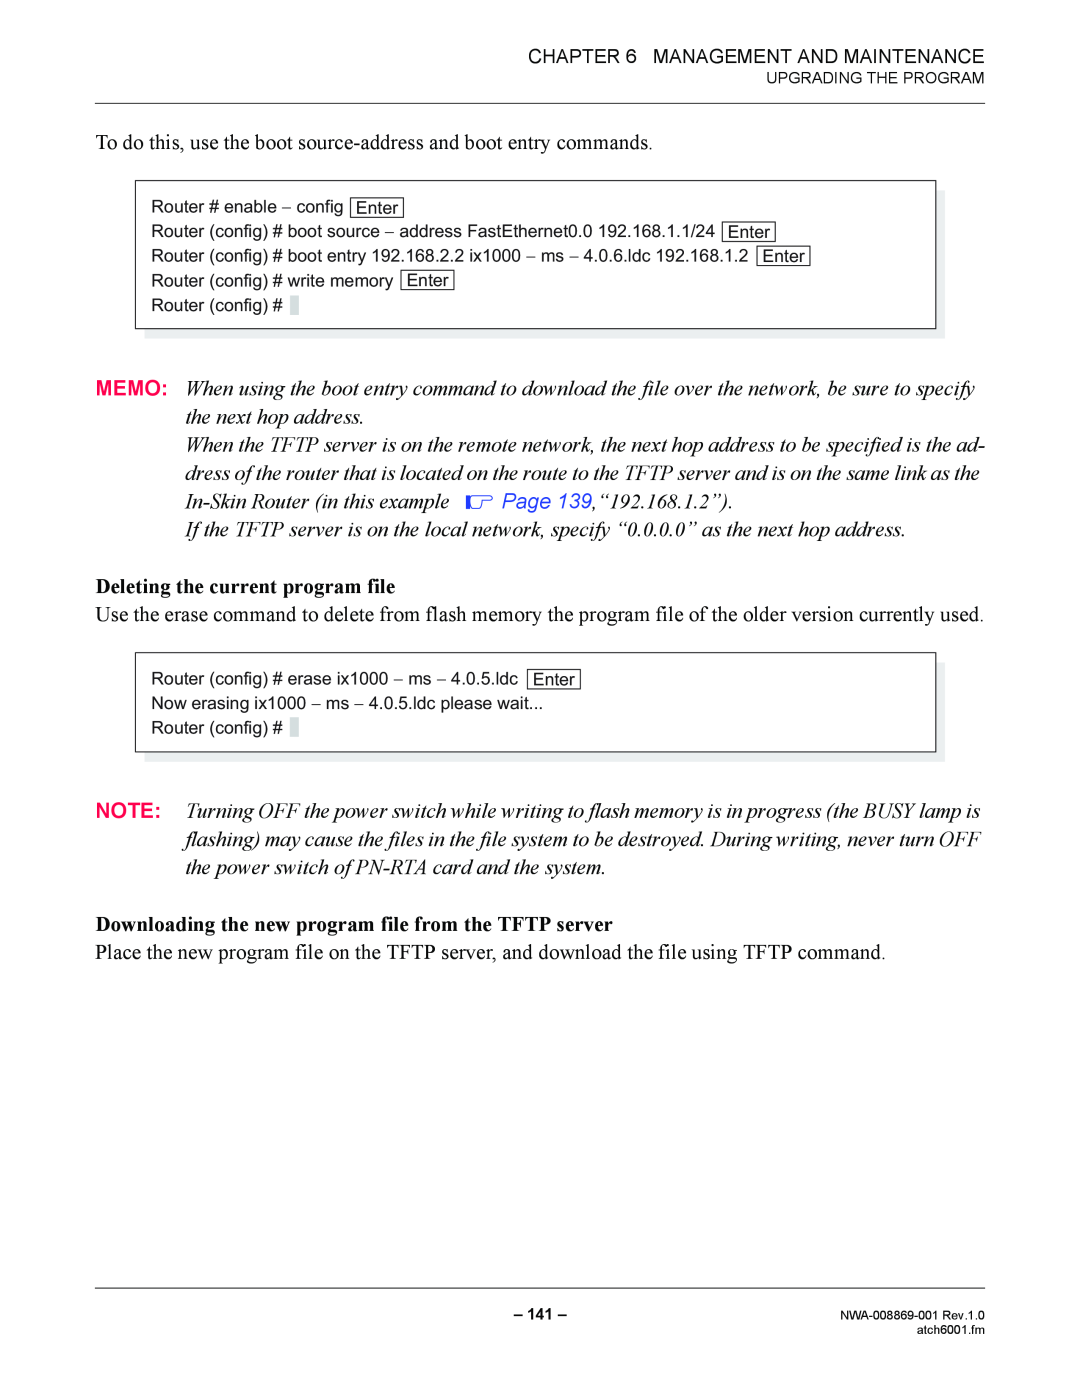 NEC NWA-008869-001 manual Deleting the current program file, Downloading the new program file from the TFTP server 